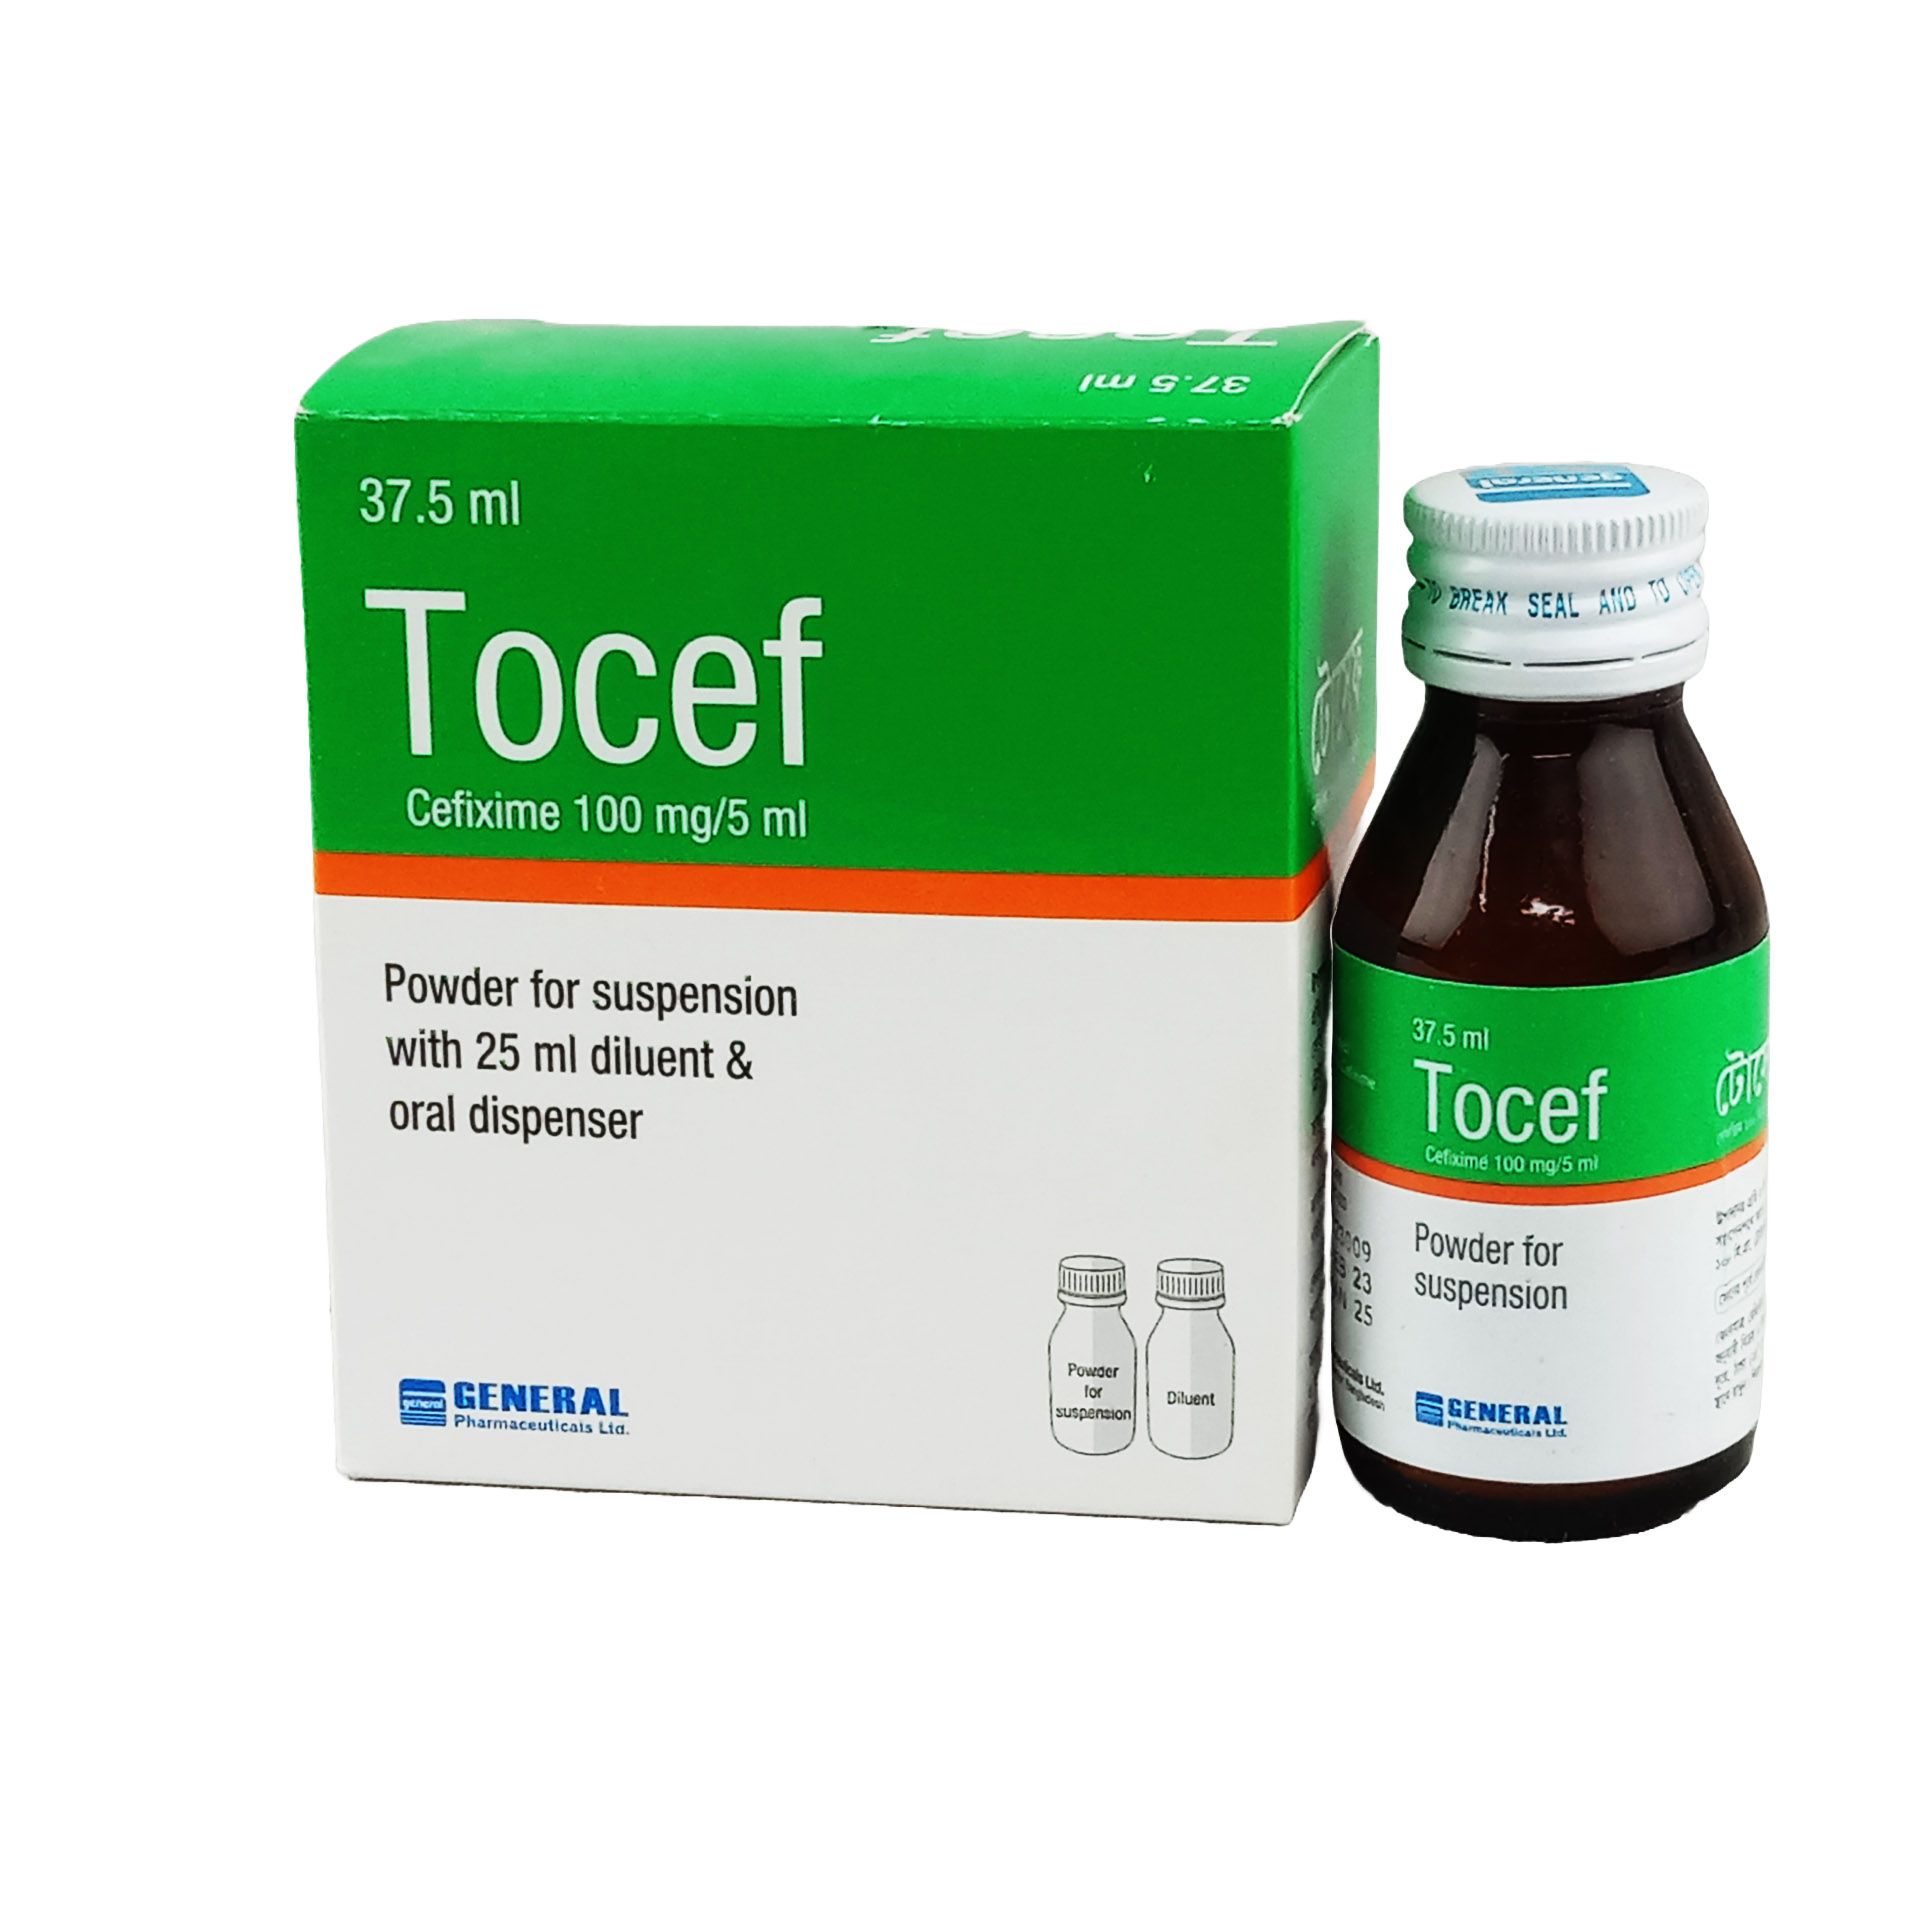 Tocef 200mg/5ml Powder for Suspension